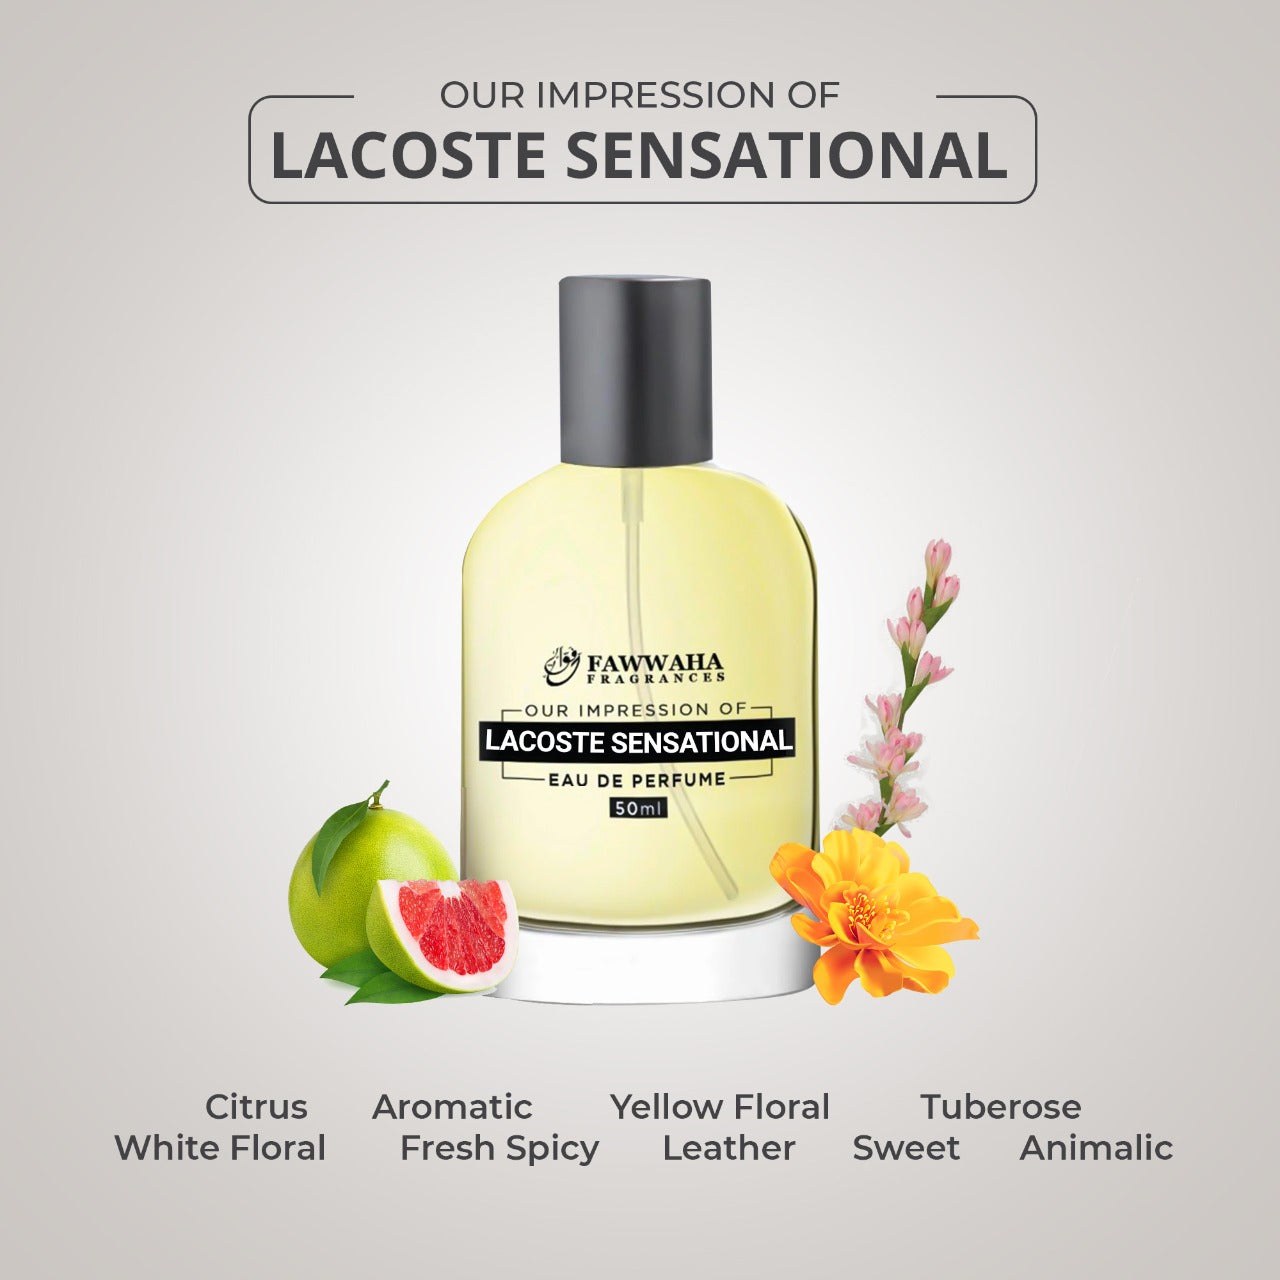 Our Impression of Lacoste Sensational